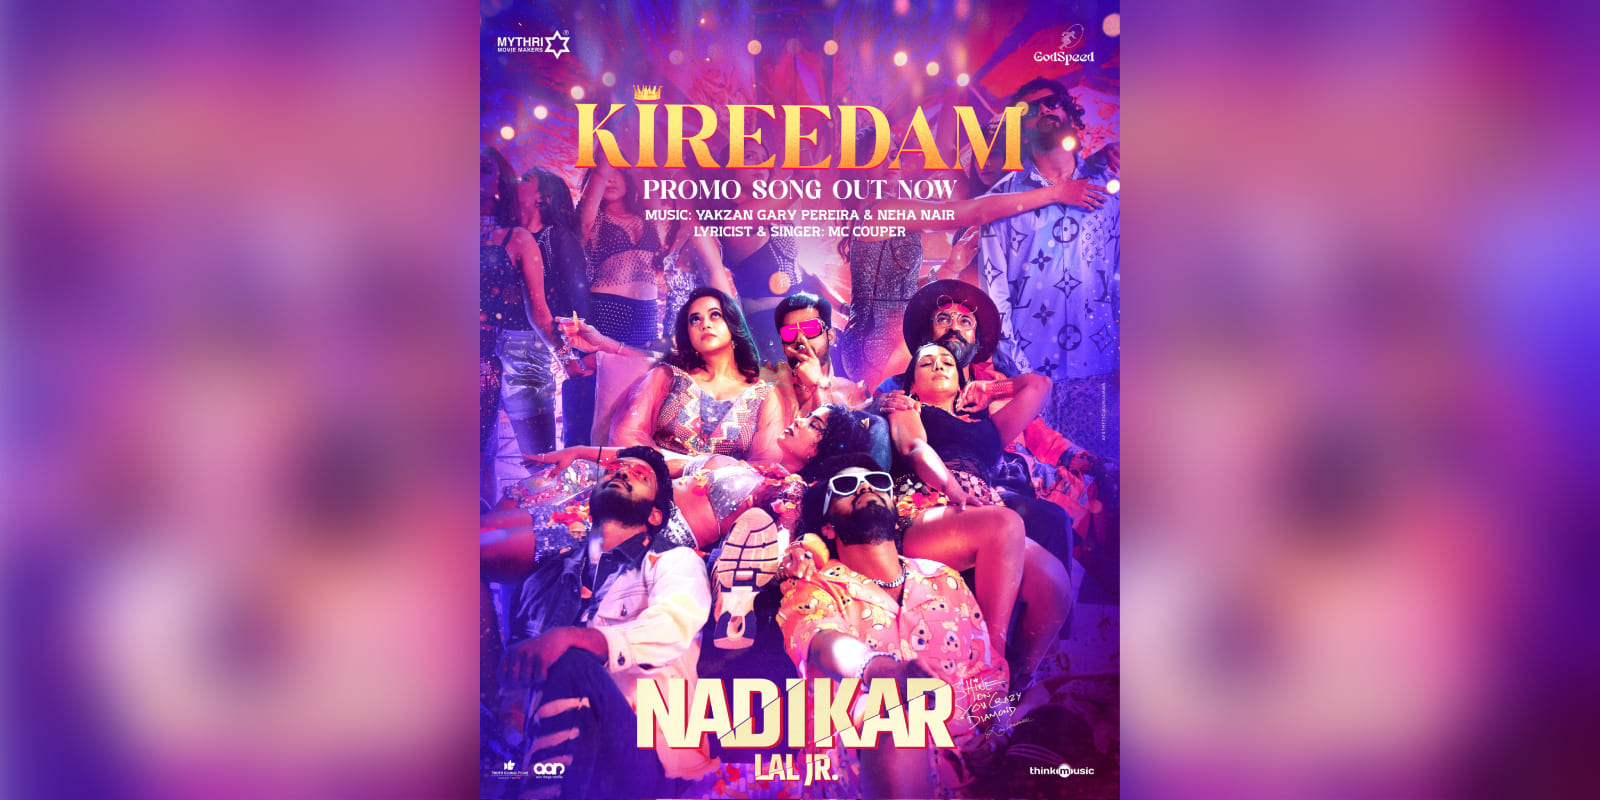 Kireedam promo song from Nadikar out